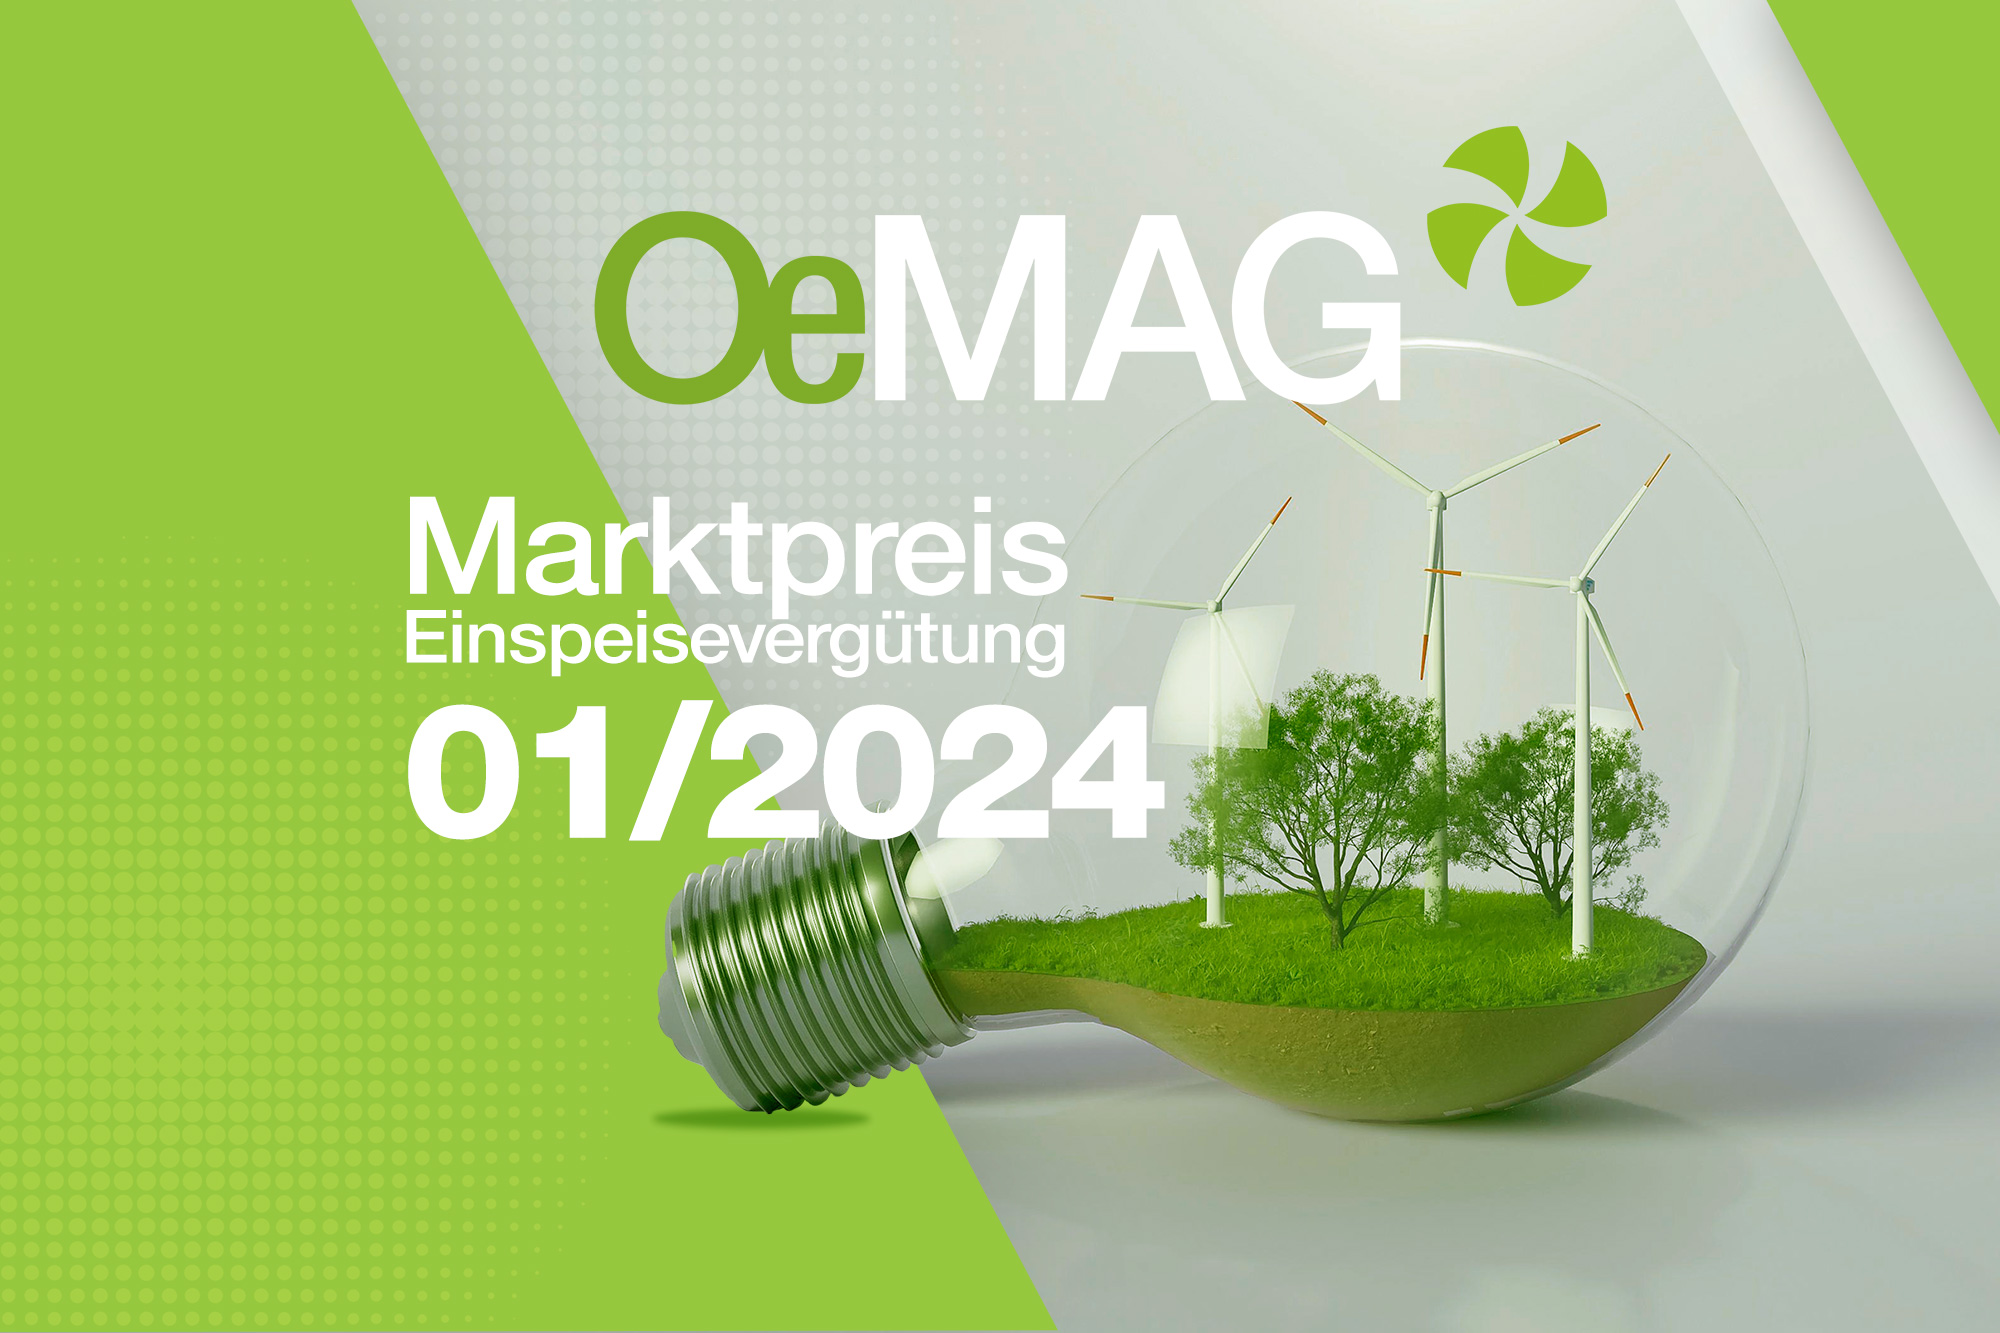 OeMAG Marktpreis 01/2024 Einspeisevergütung